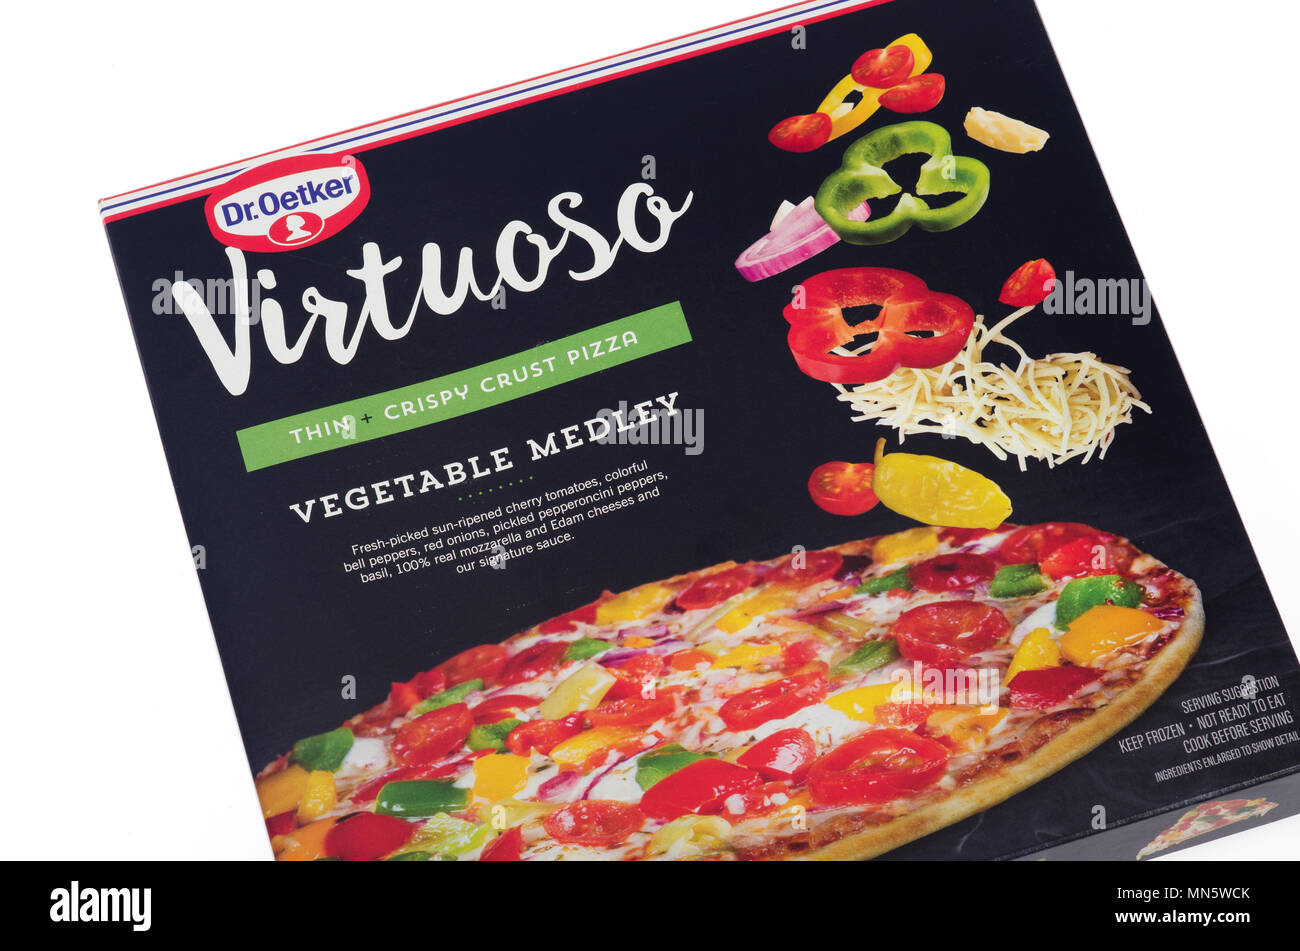 Dr. Oetker Frozen Virtuoso Vegetable Medley thin crispy crust pizza Stock Photo